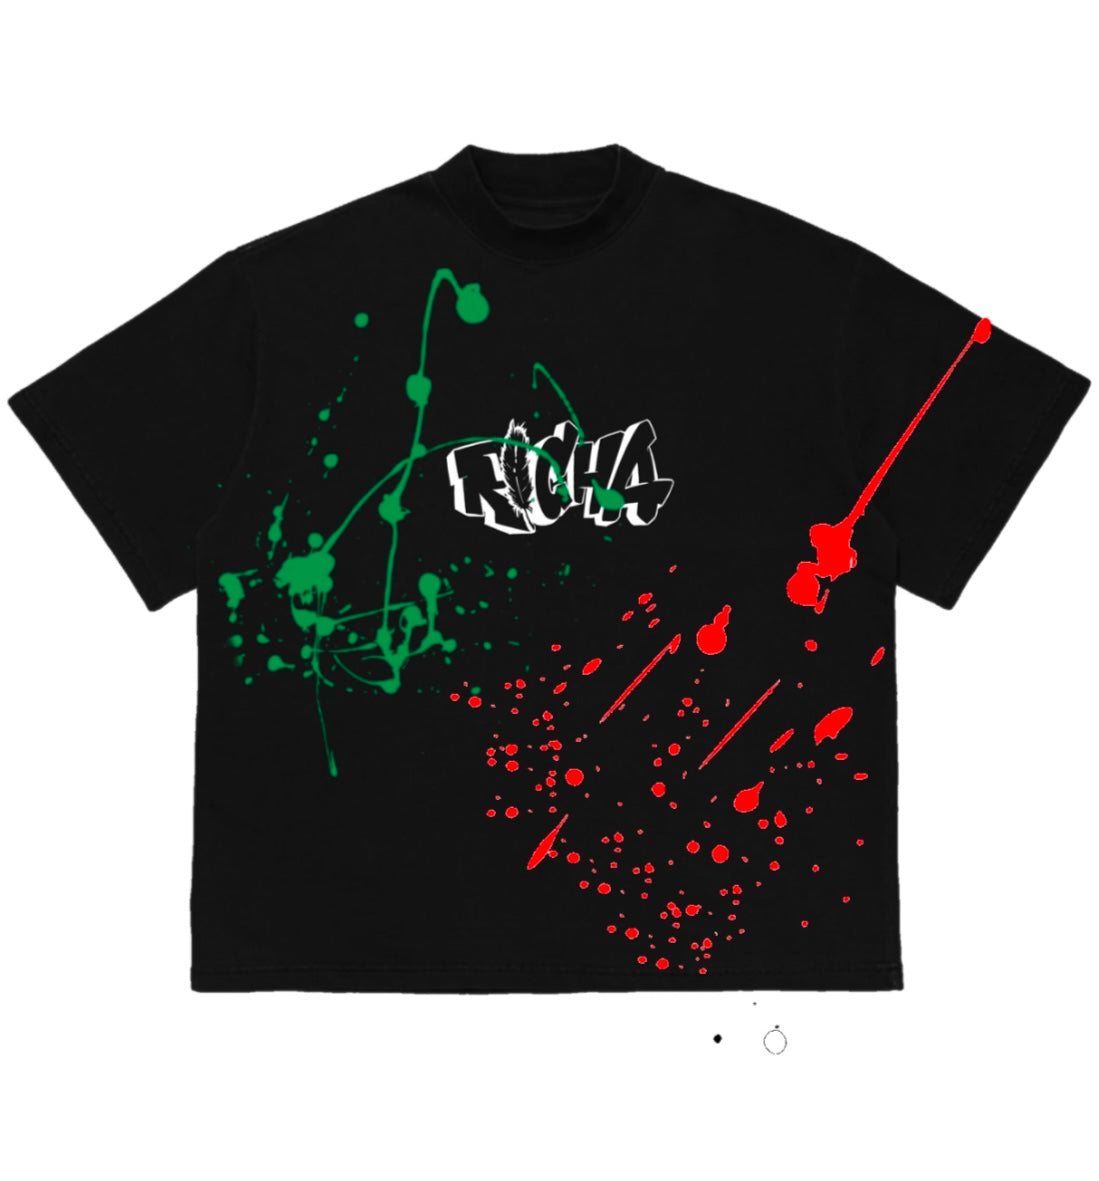 Palestine Black T-shirt